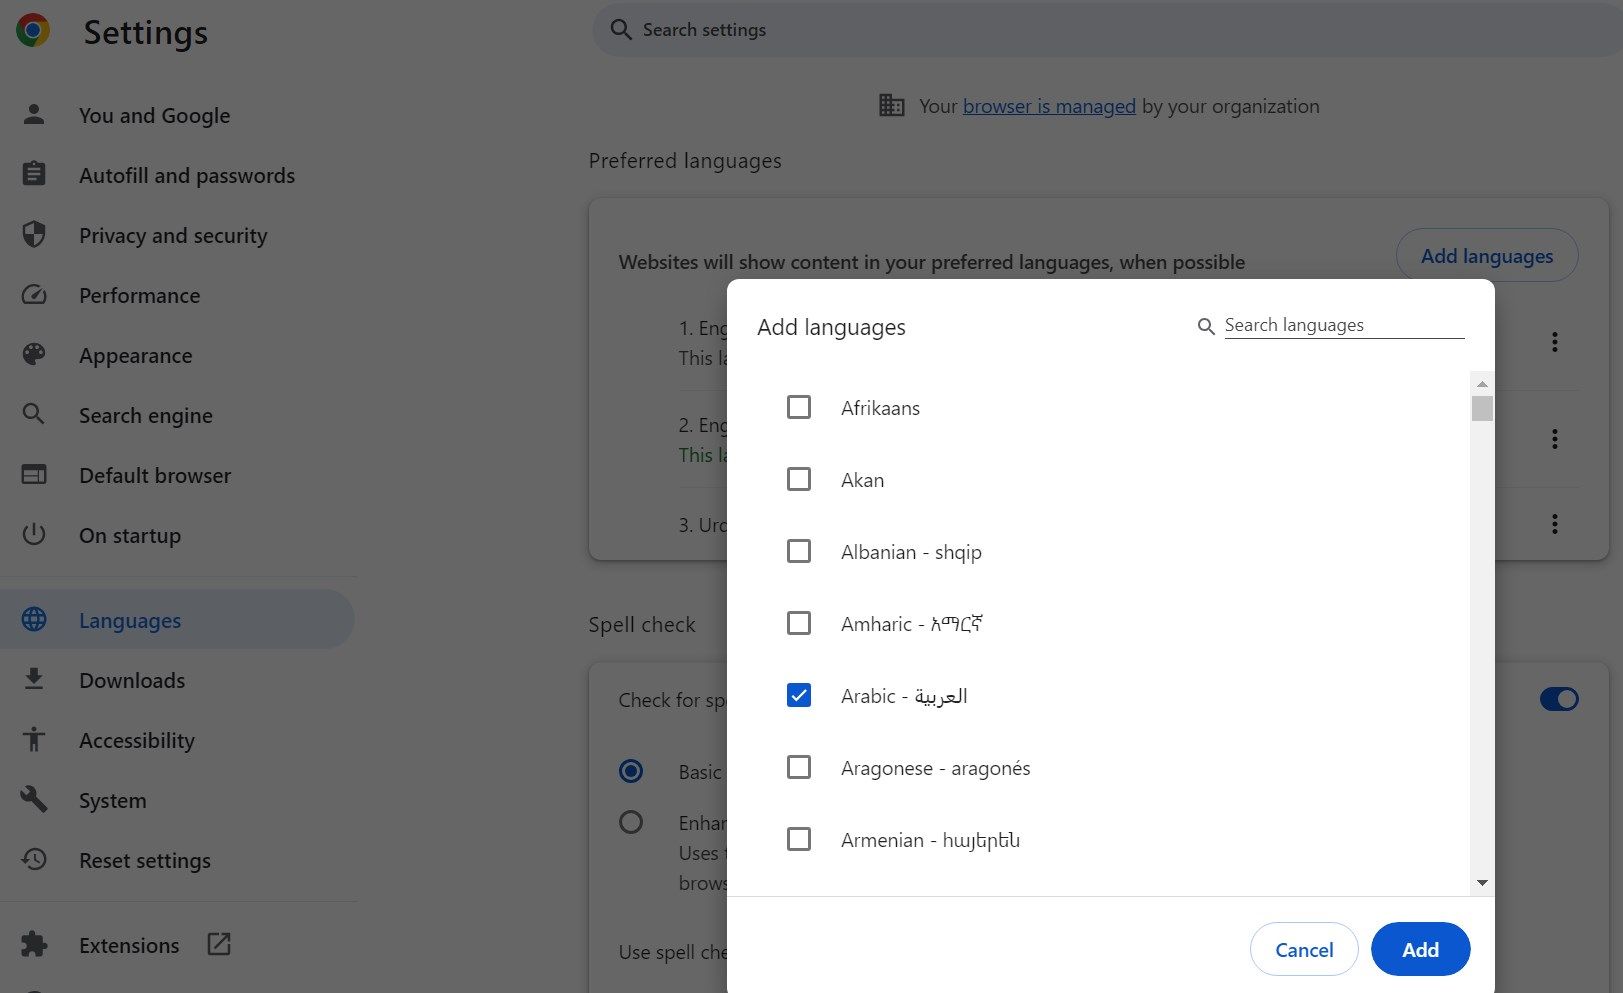 Adding a new language in Google Chrome's language settings